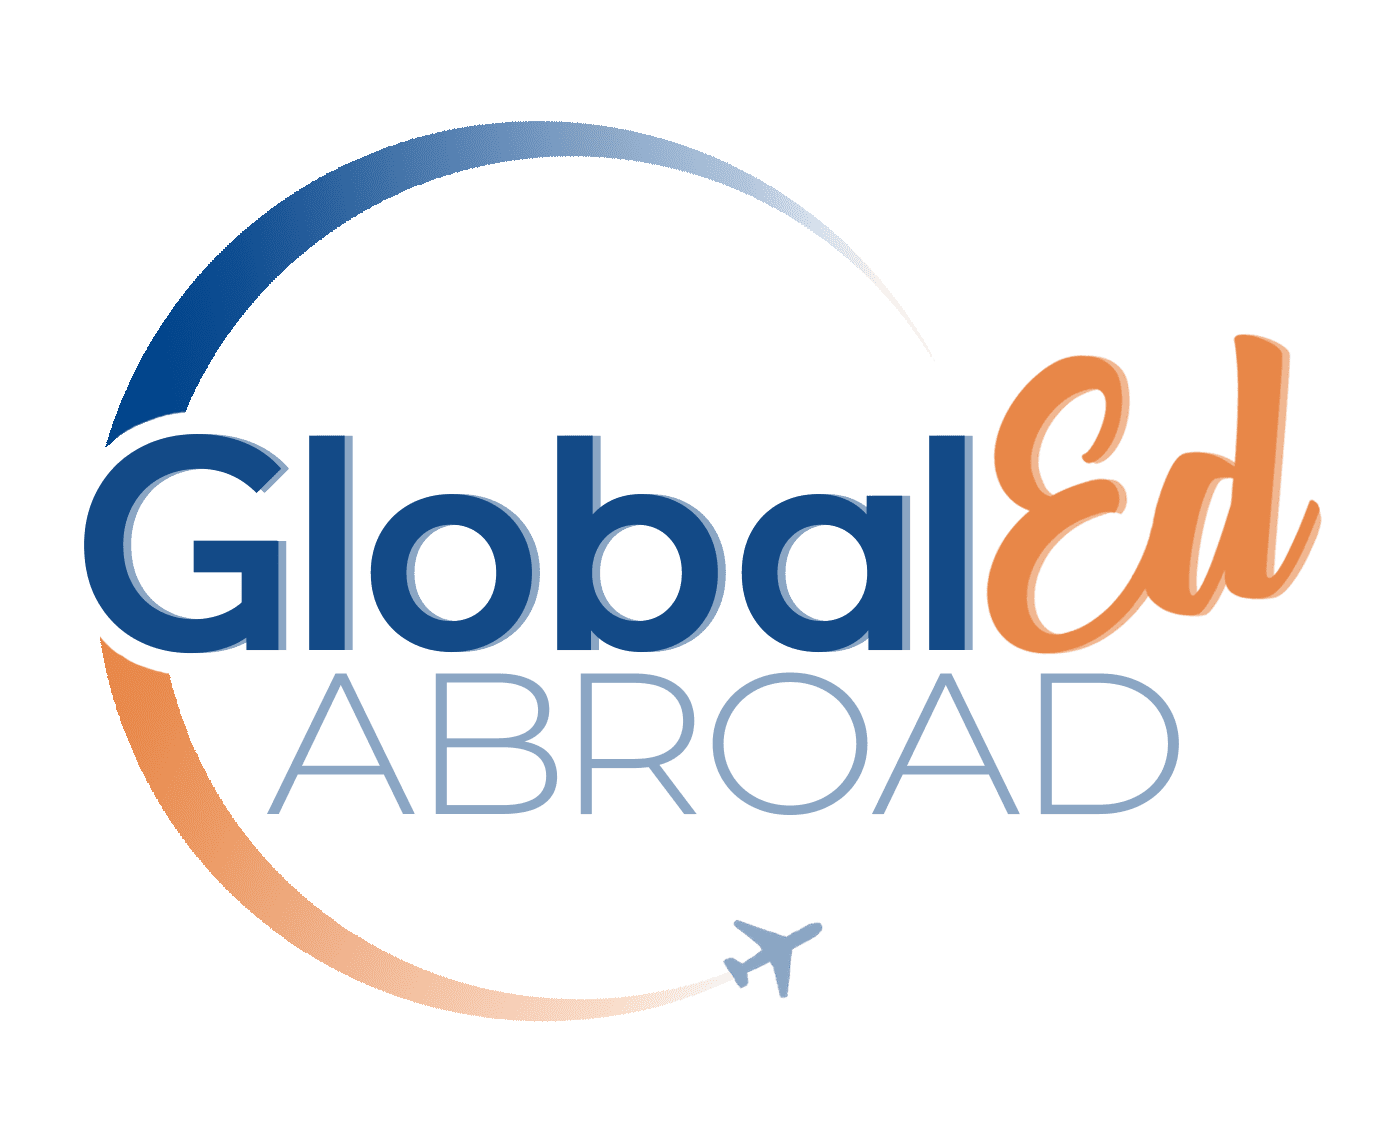 GlobalEd Abroad